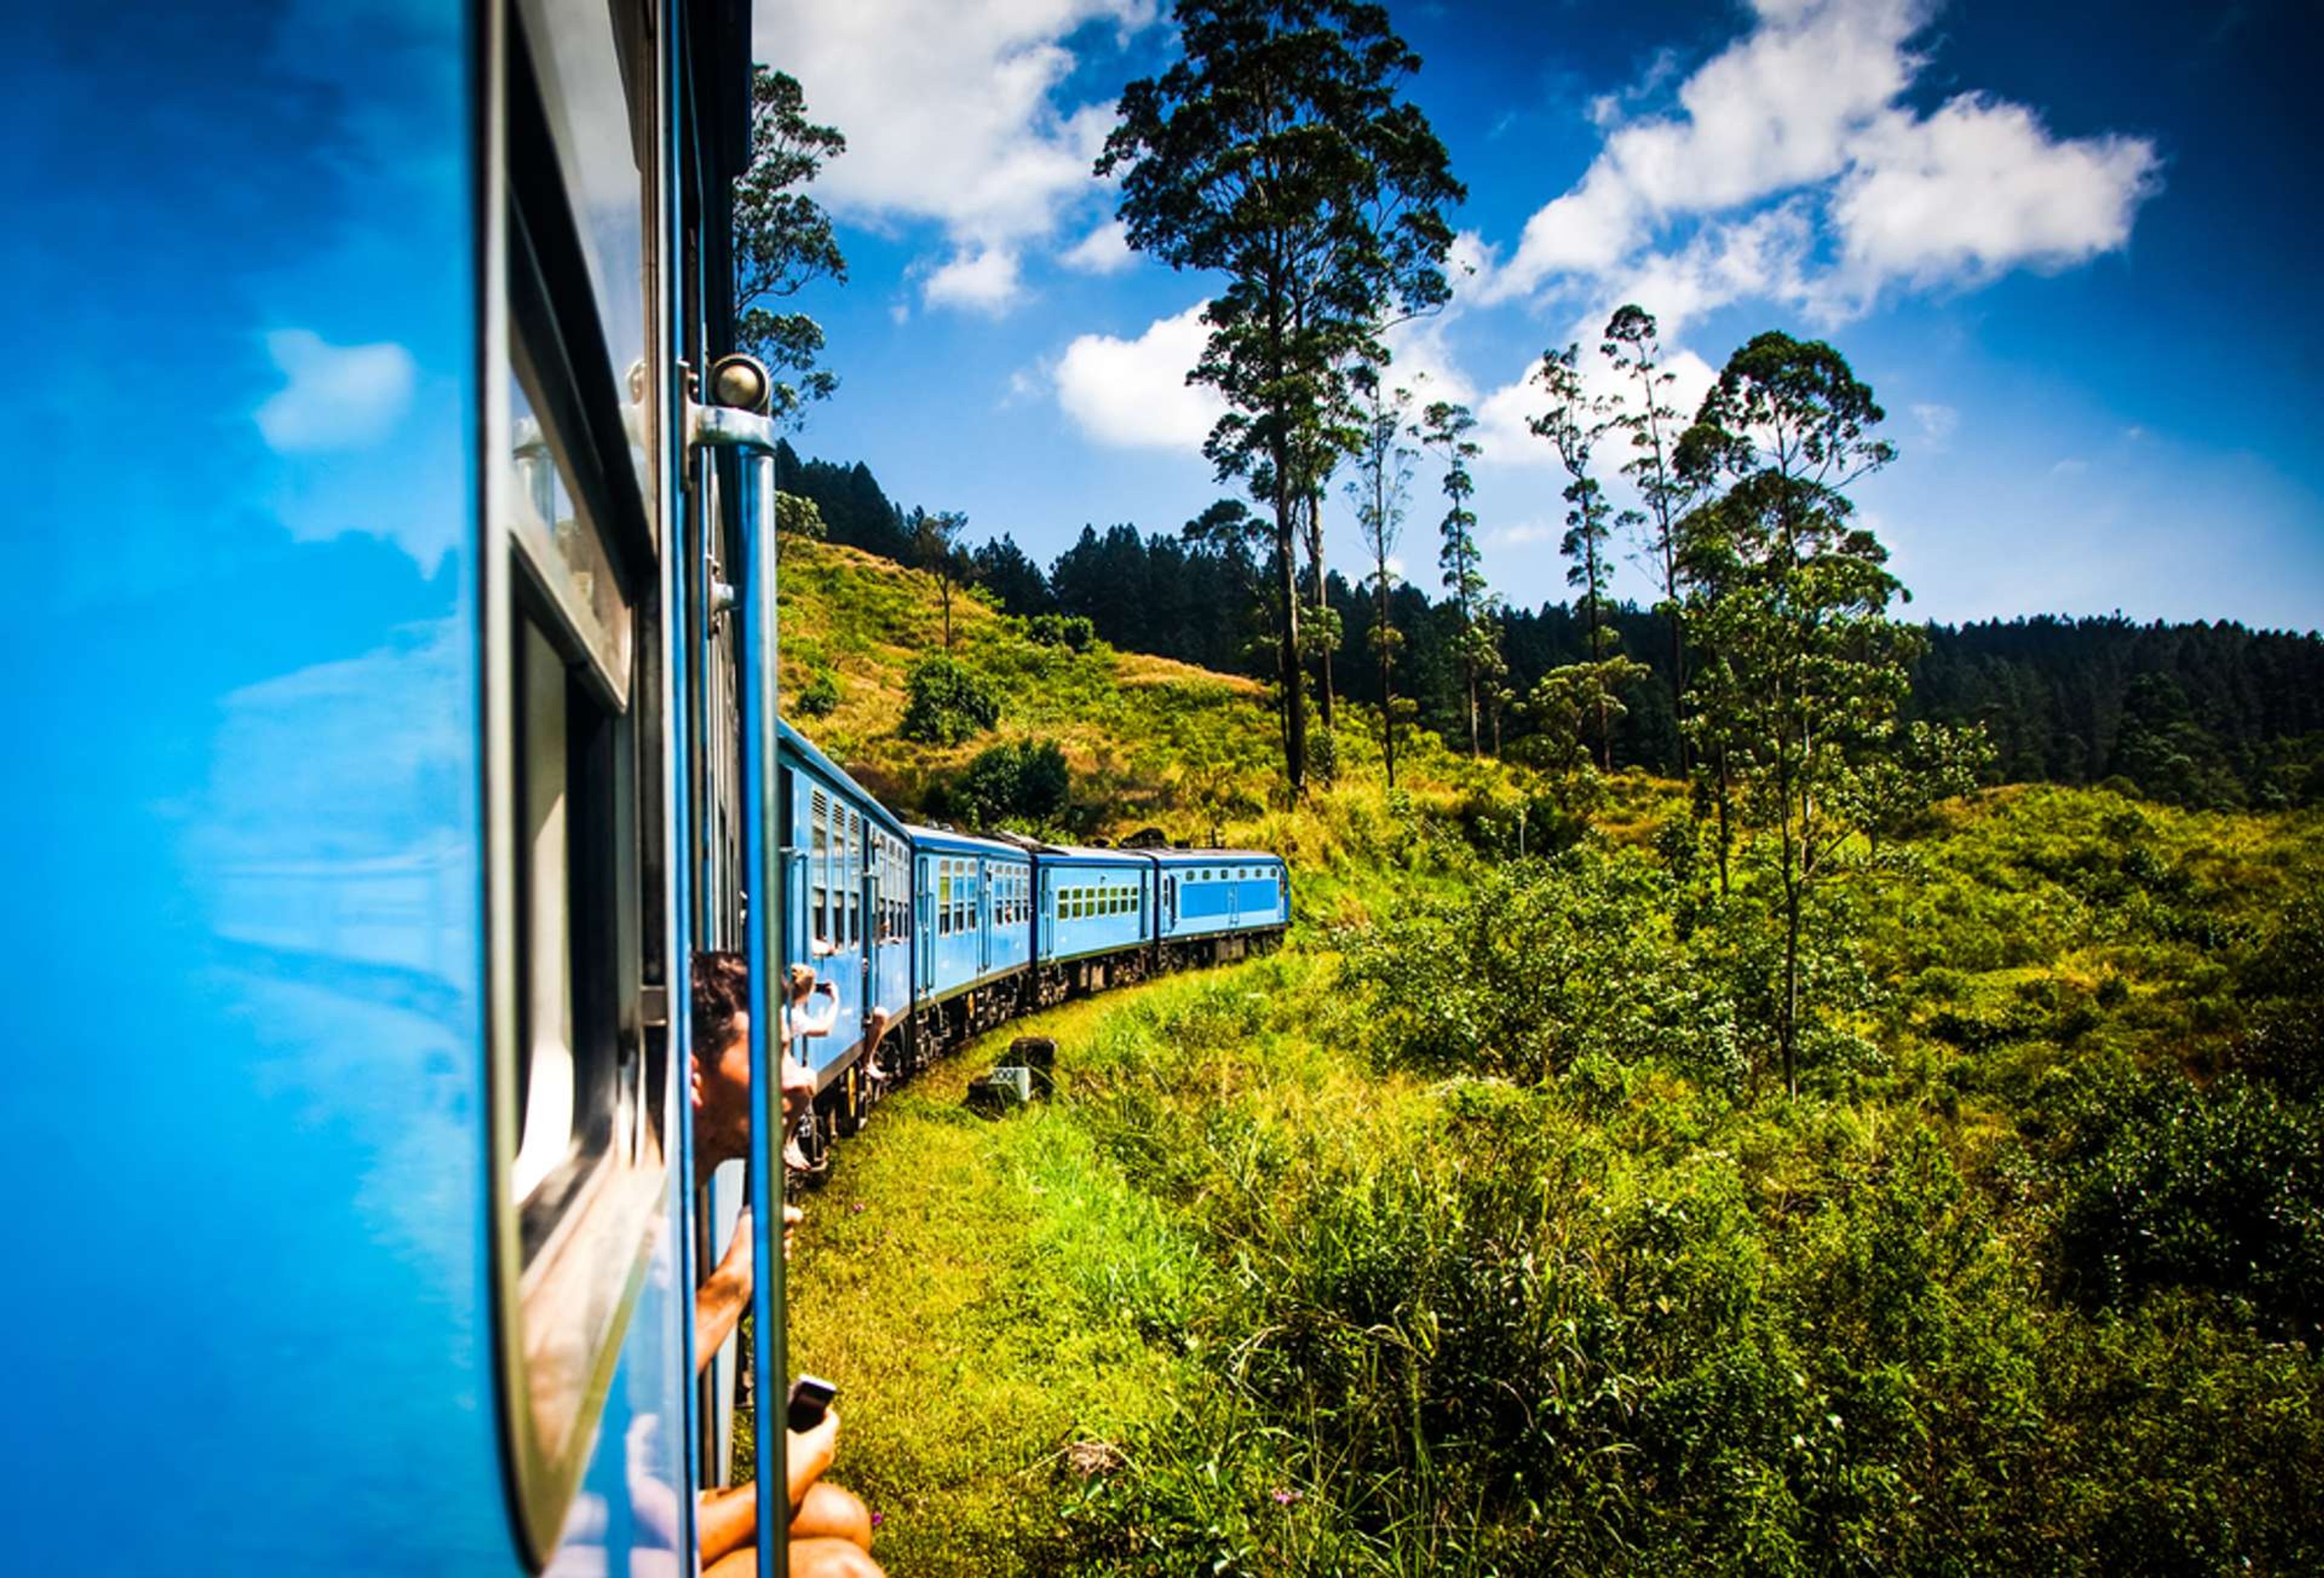 Sri Lanka trein met theeplantages